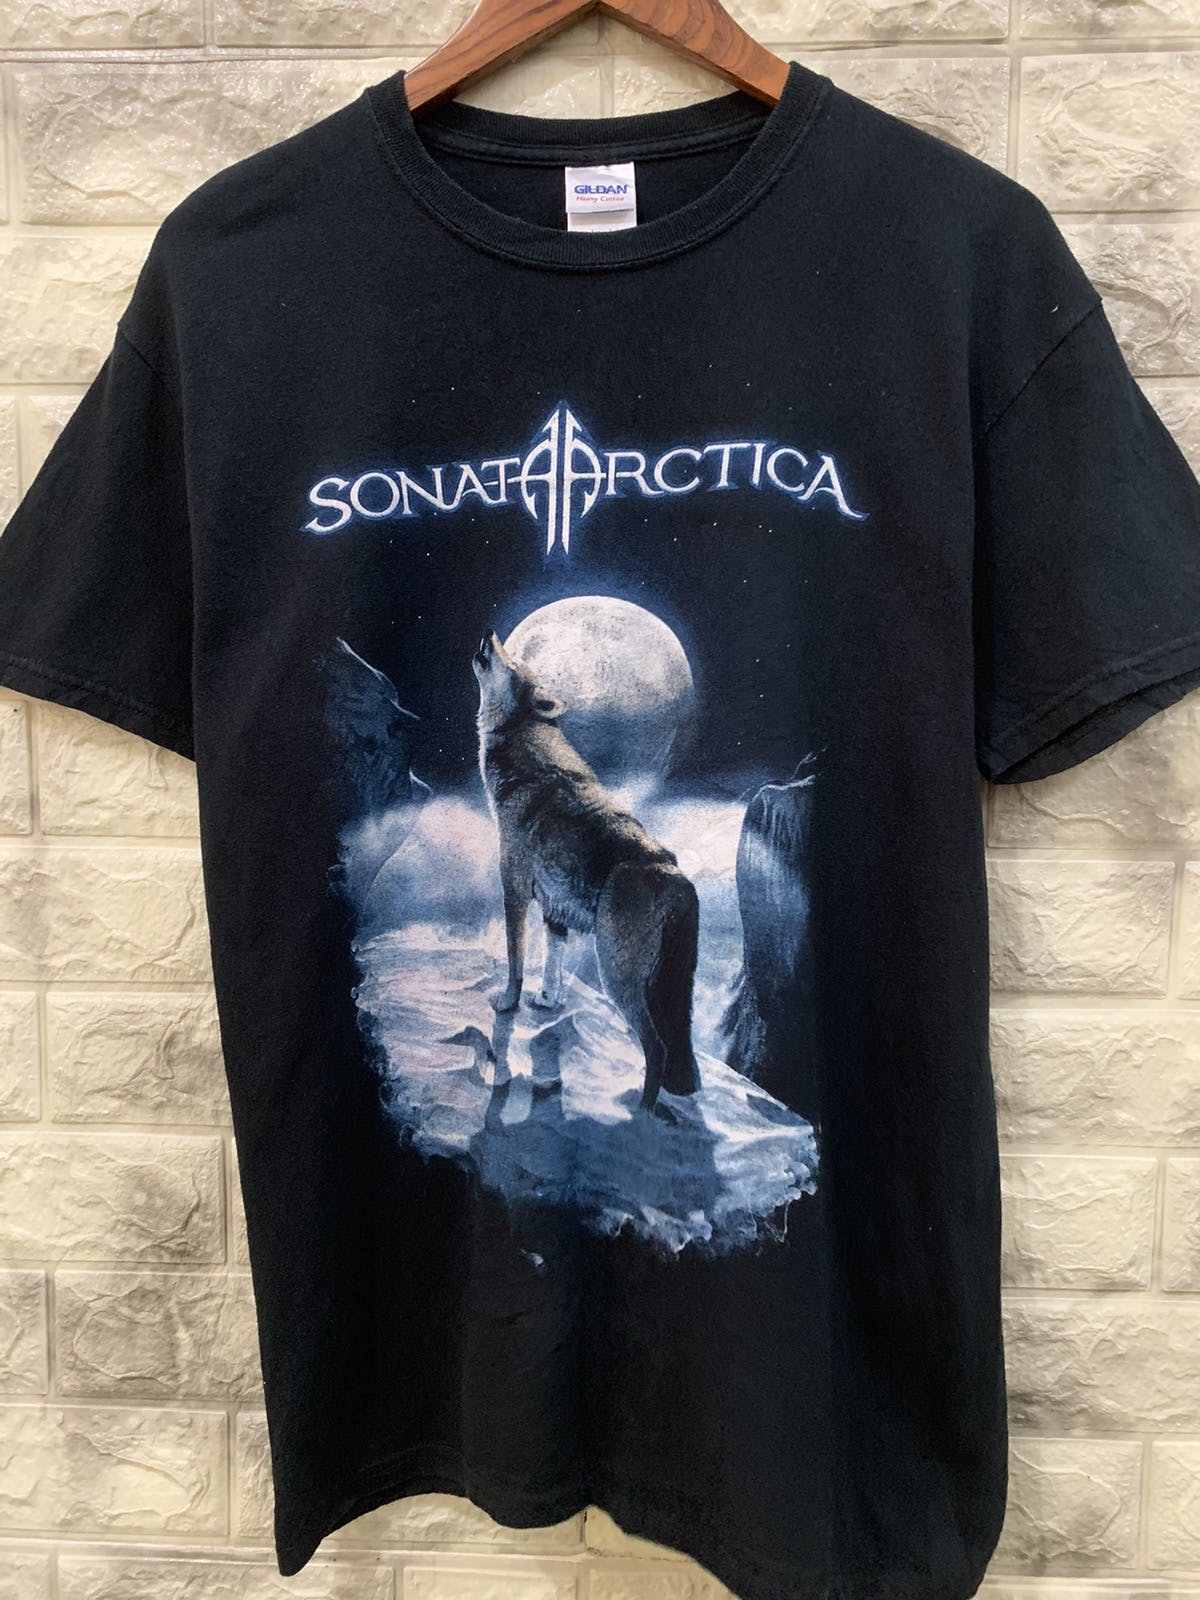 Vintage Sonata Arctica Metal Band T-Shirt - 2